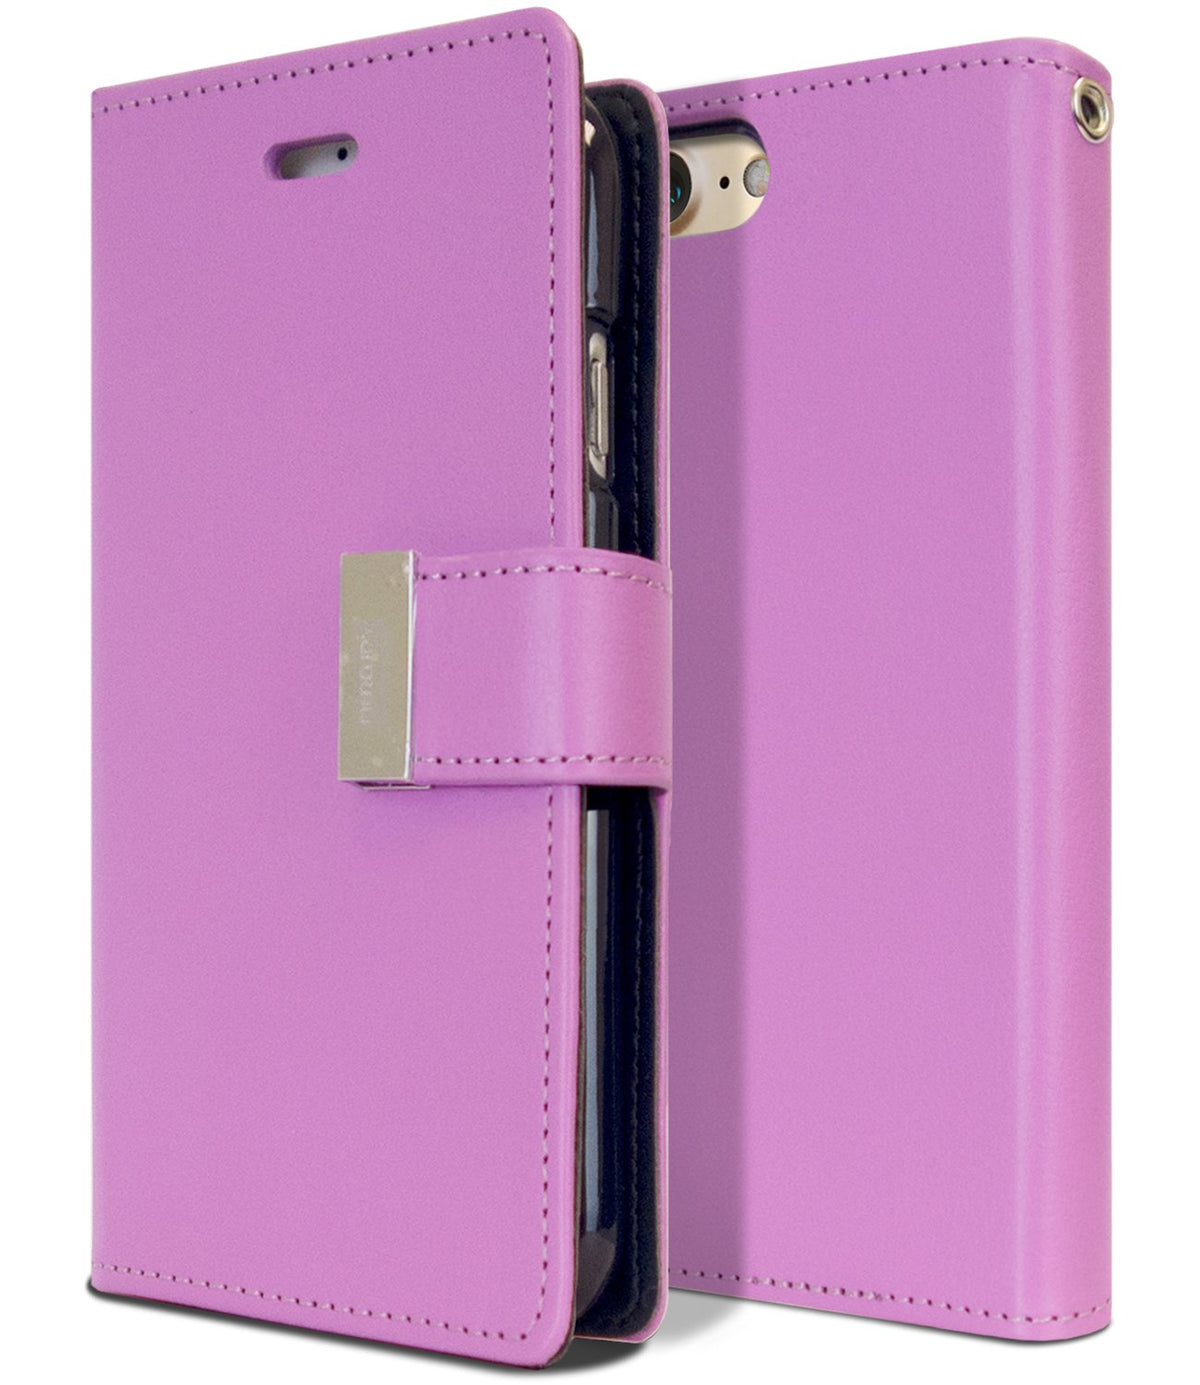 Iphone 7Plus / 8Plus Wallet Case W/ Extra Card Slots In Purple